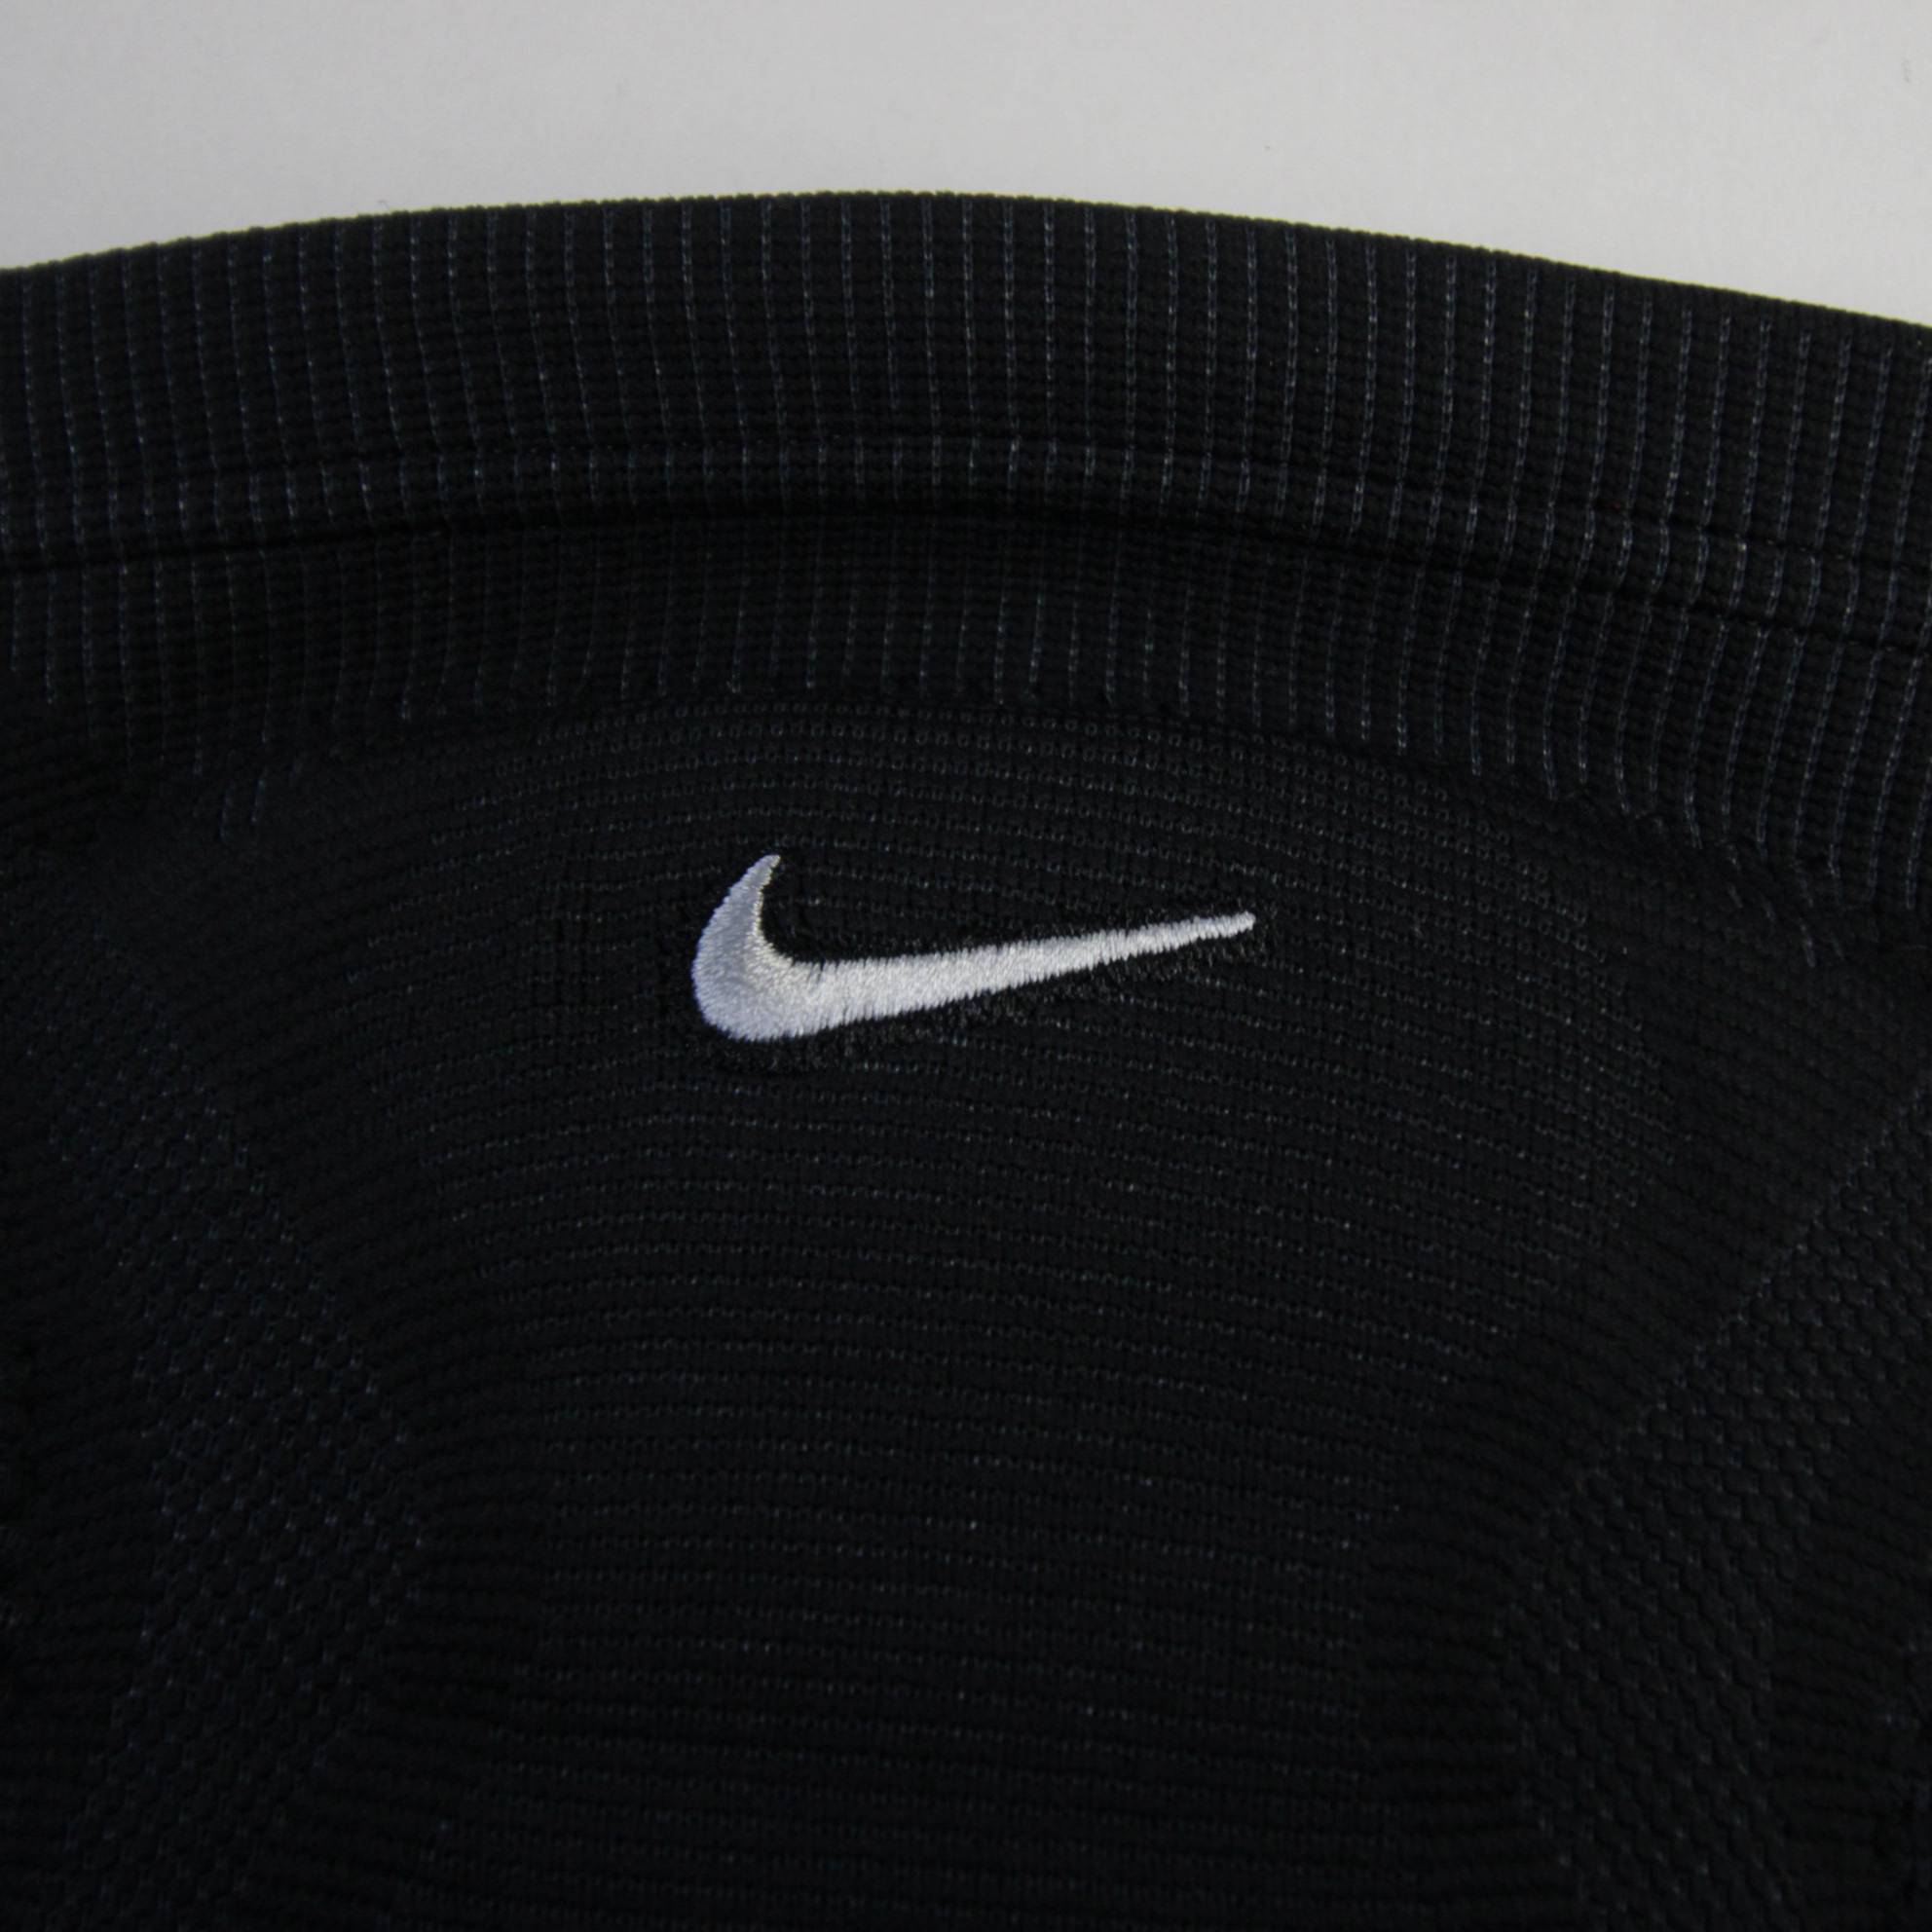 NWT Nike Vapor Volleyball Knee Pads Pair Unisex XL/2XL Black New | eBay